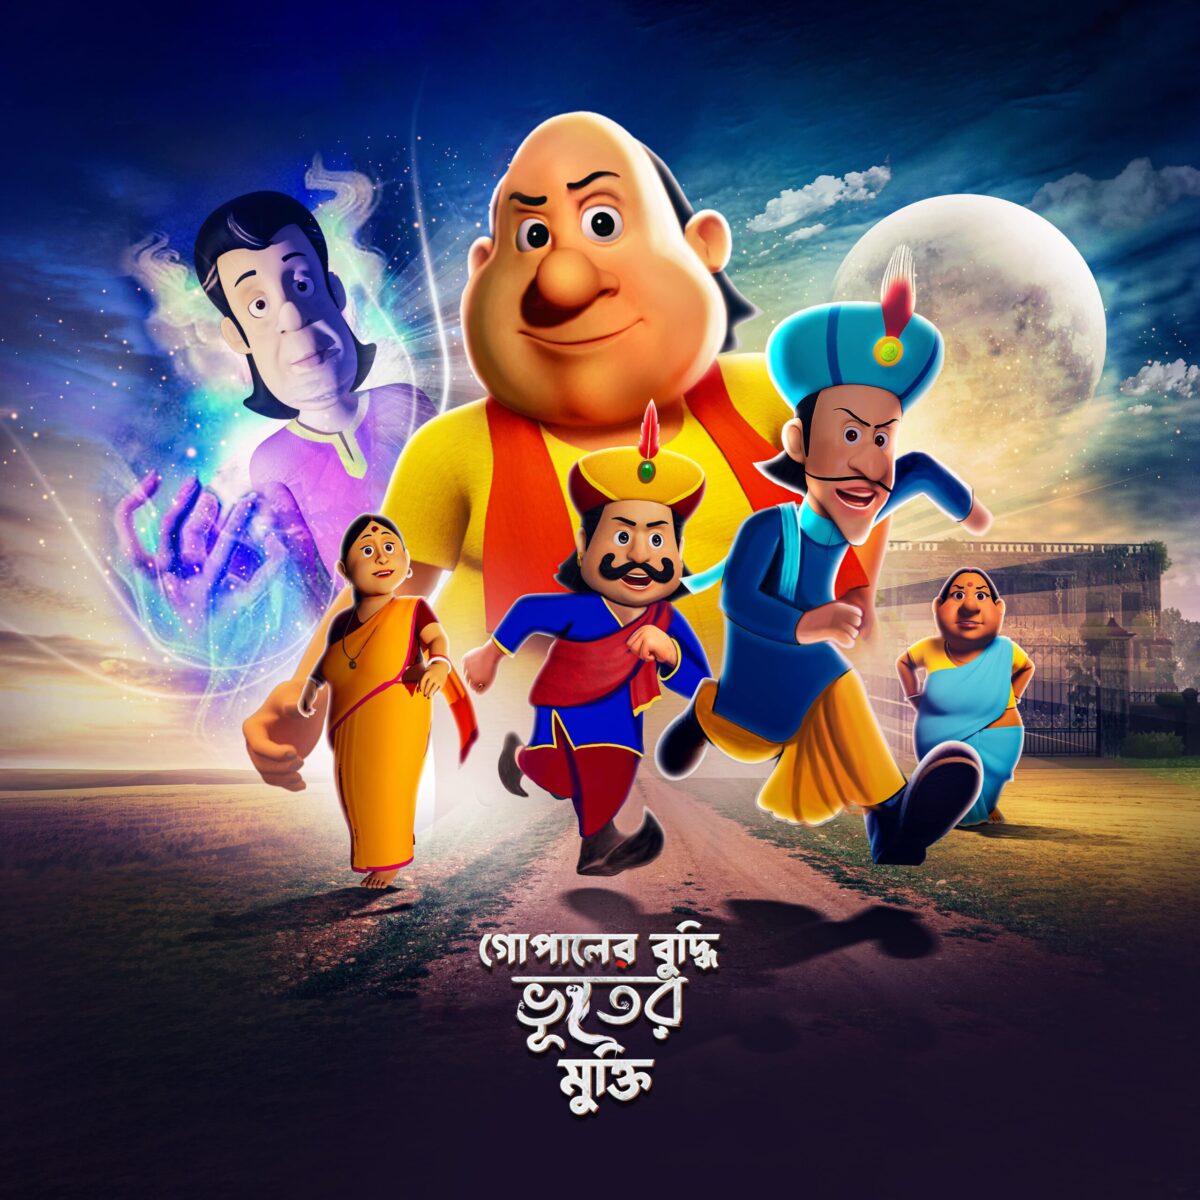 Sony AATH is premiering the 4th Gopal Bhar movie titled 'Gopaler Buddhi